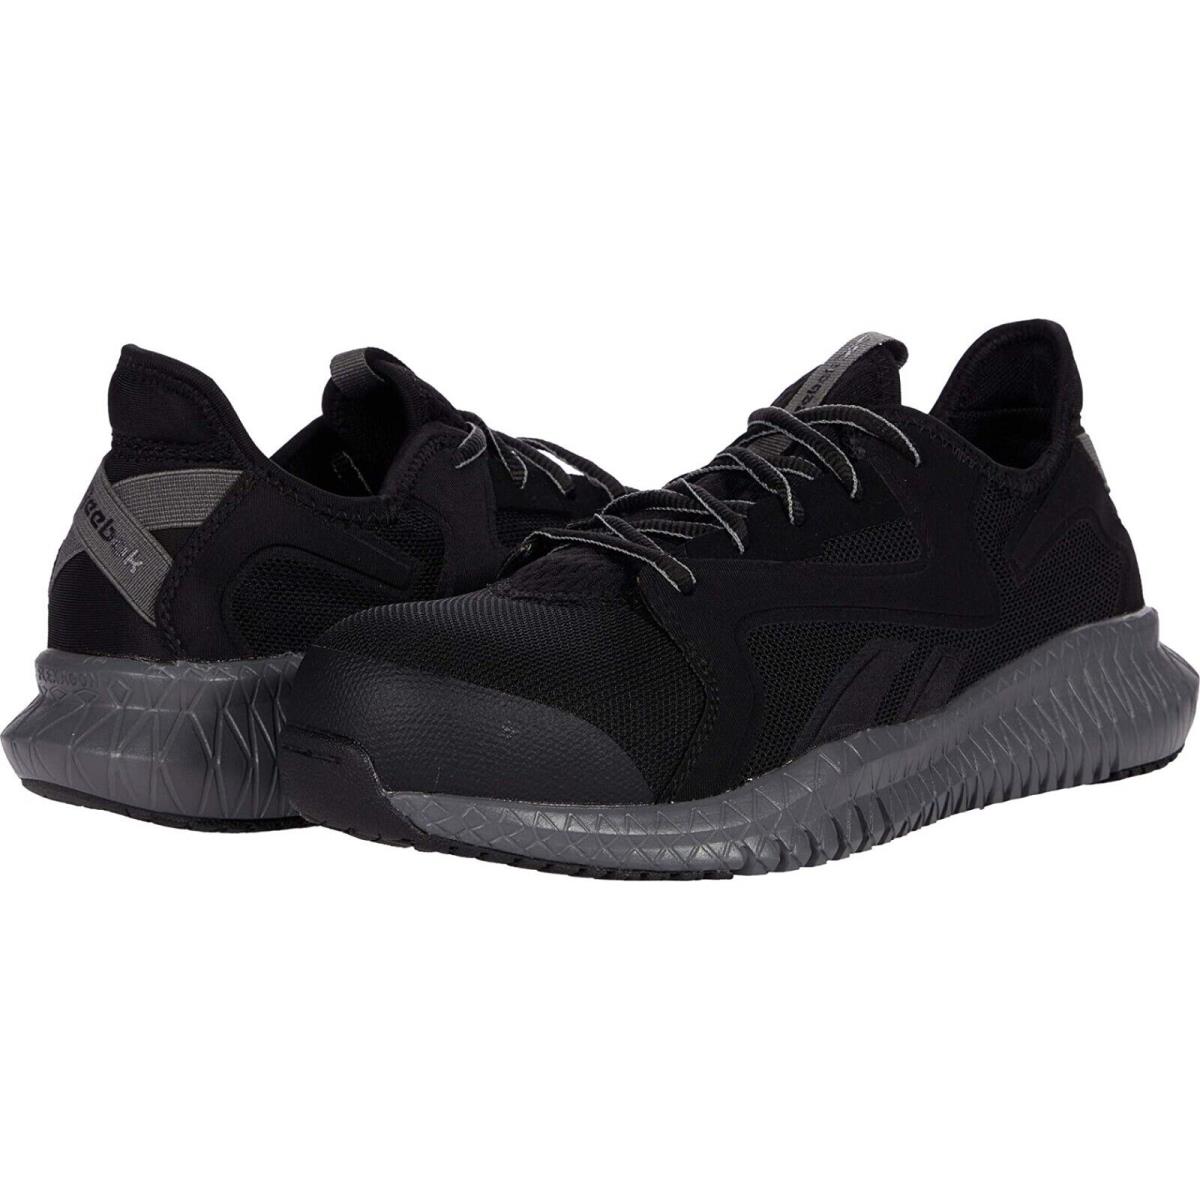 Reebok N7576 Work Men`s Flexagon 3.0 Athletic Work Shoe Black/grey Size 7.5 Wide - Black/Grey